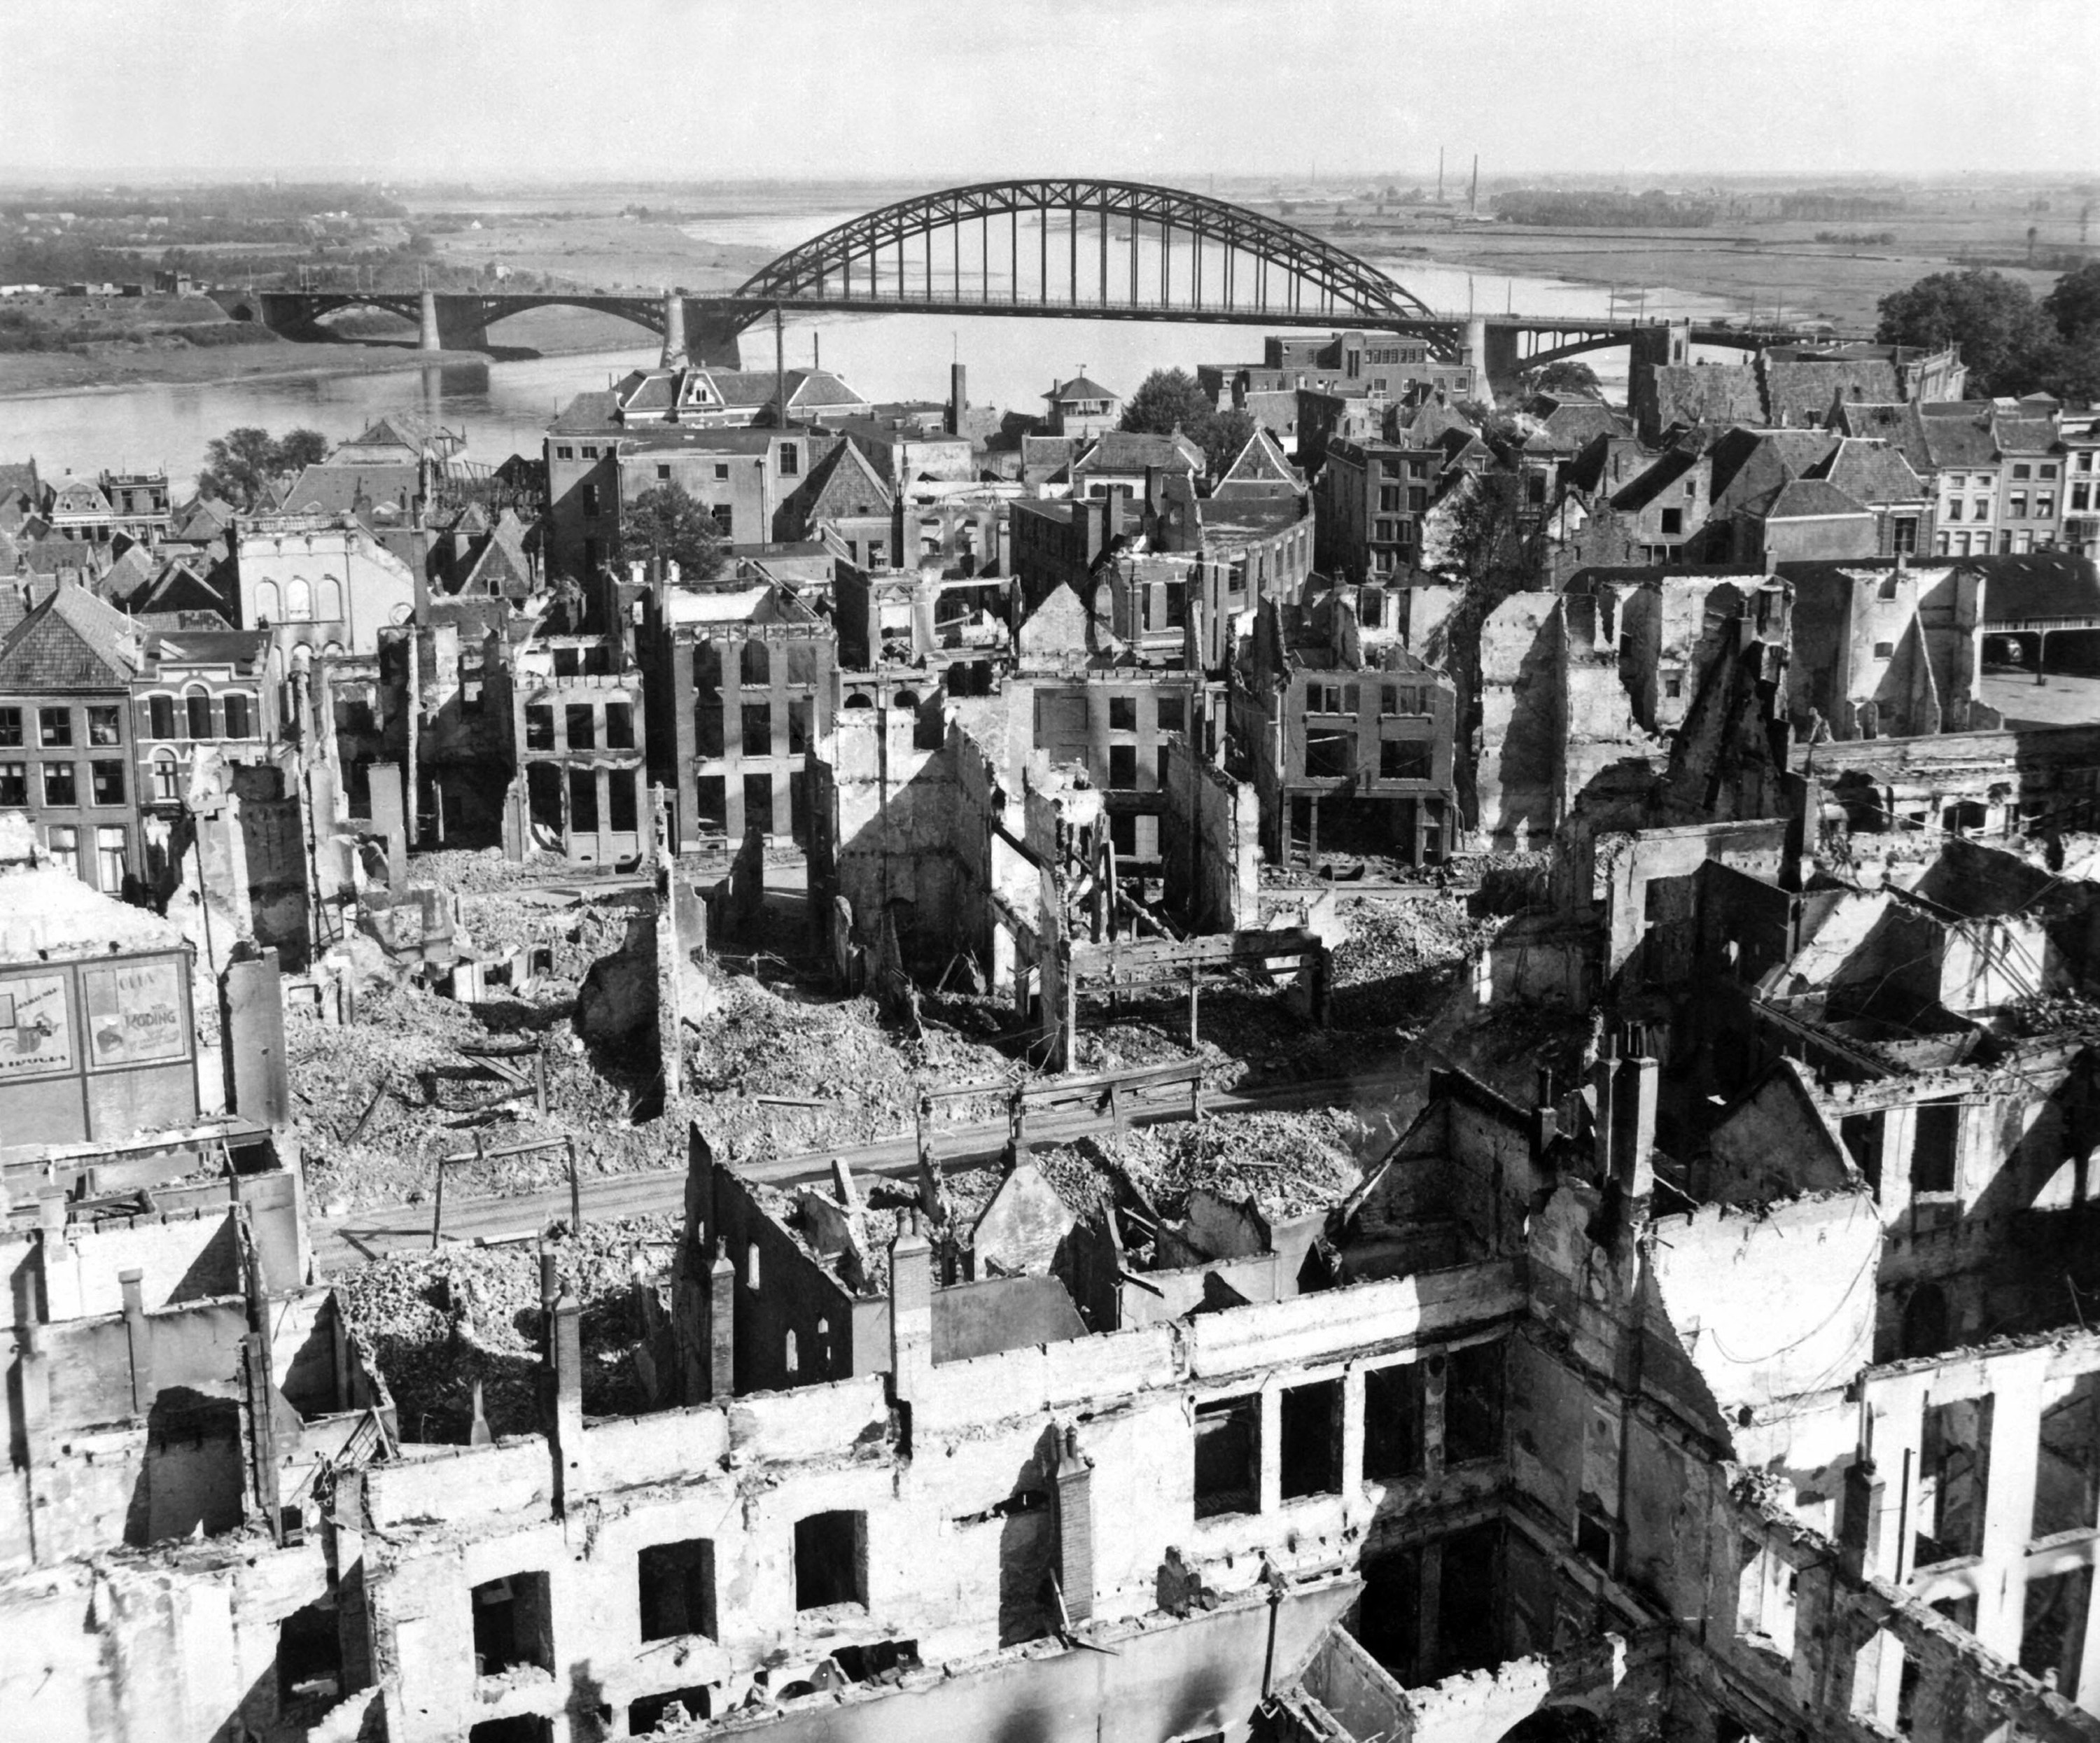 Nijmegen in ruins at the end of World War II